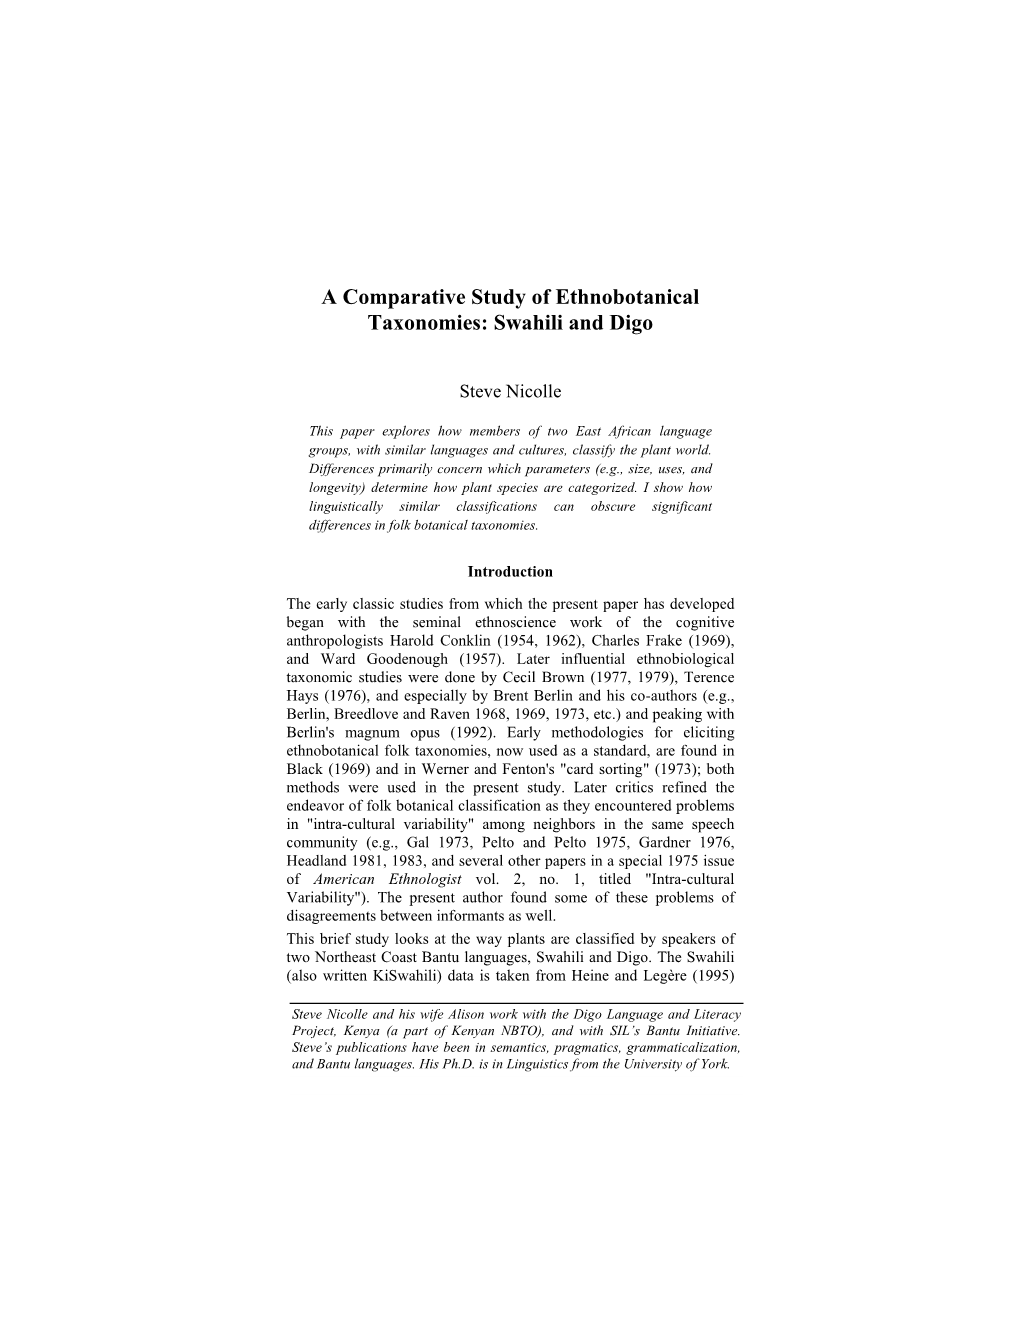 A Comparative Study of Ethnobotanical Taxonomies: Swahili and Digo